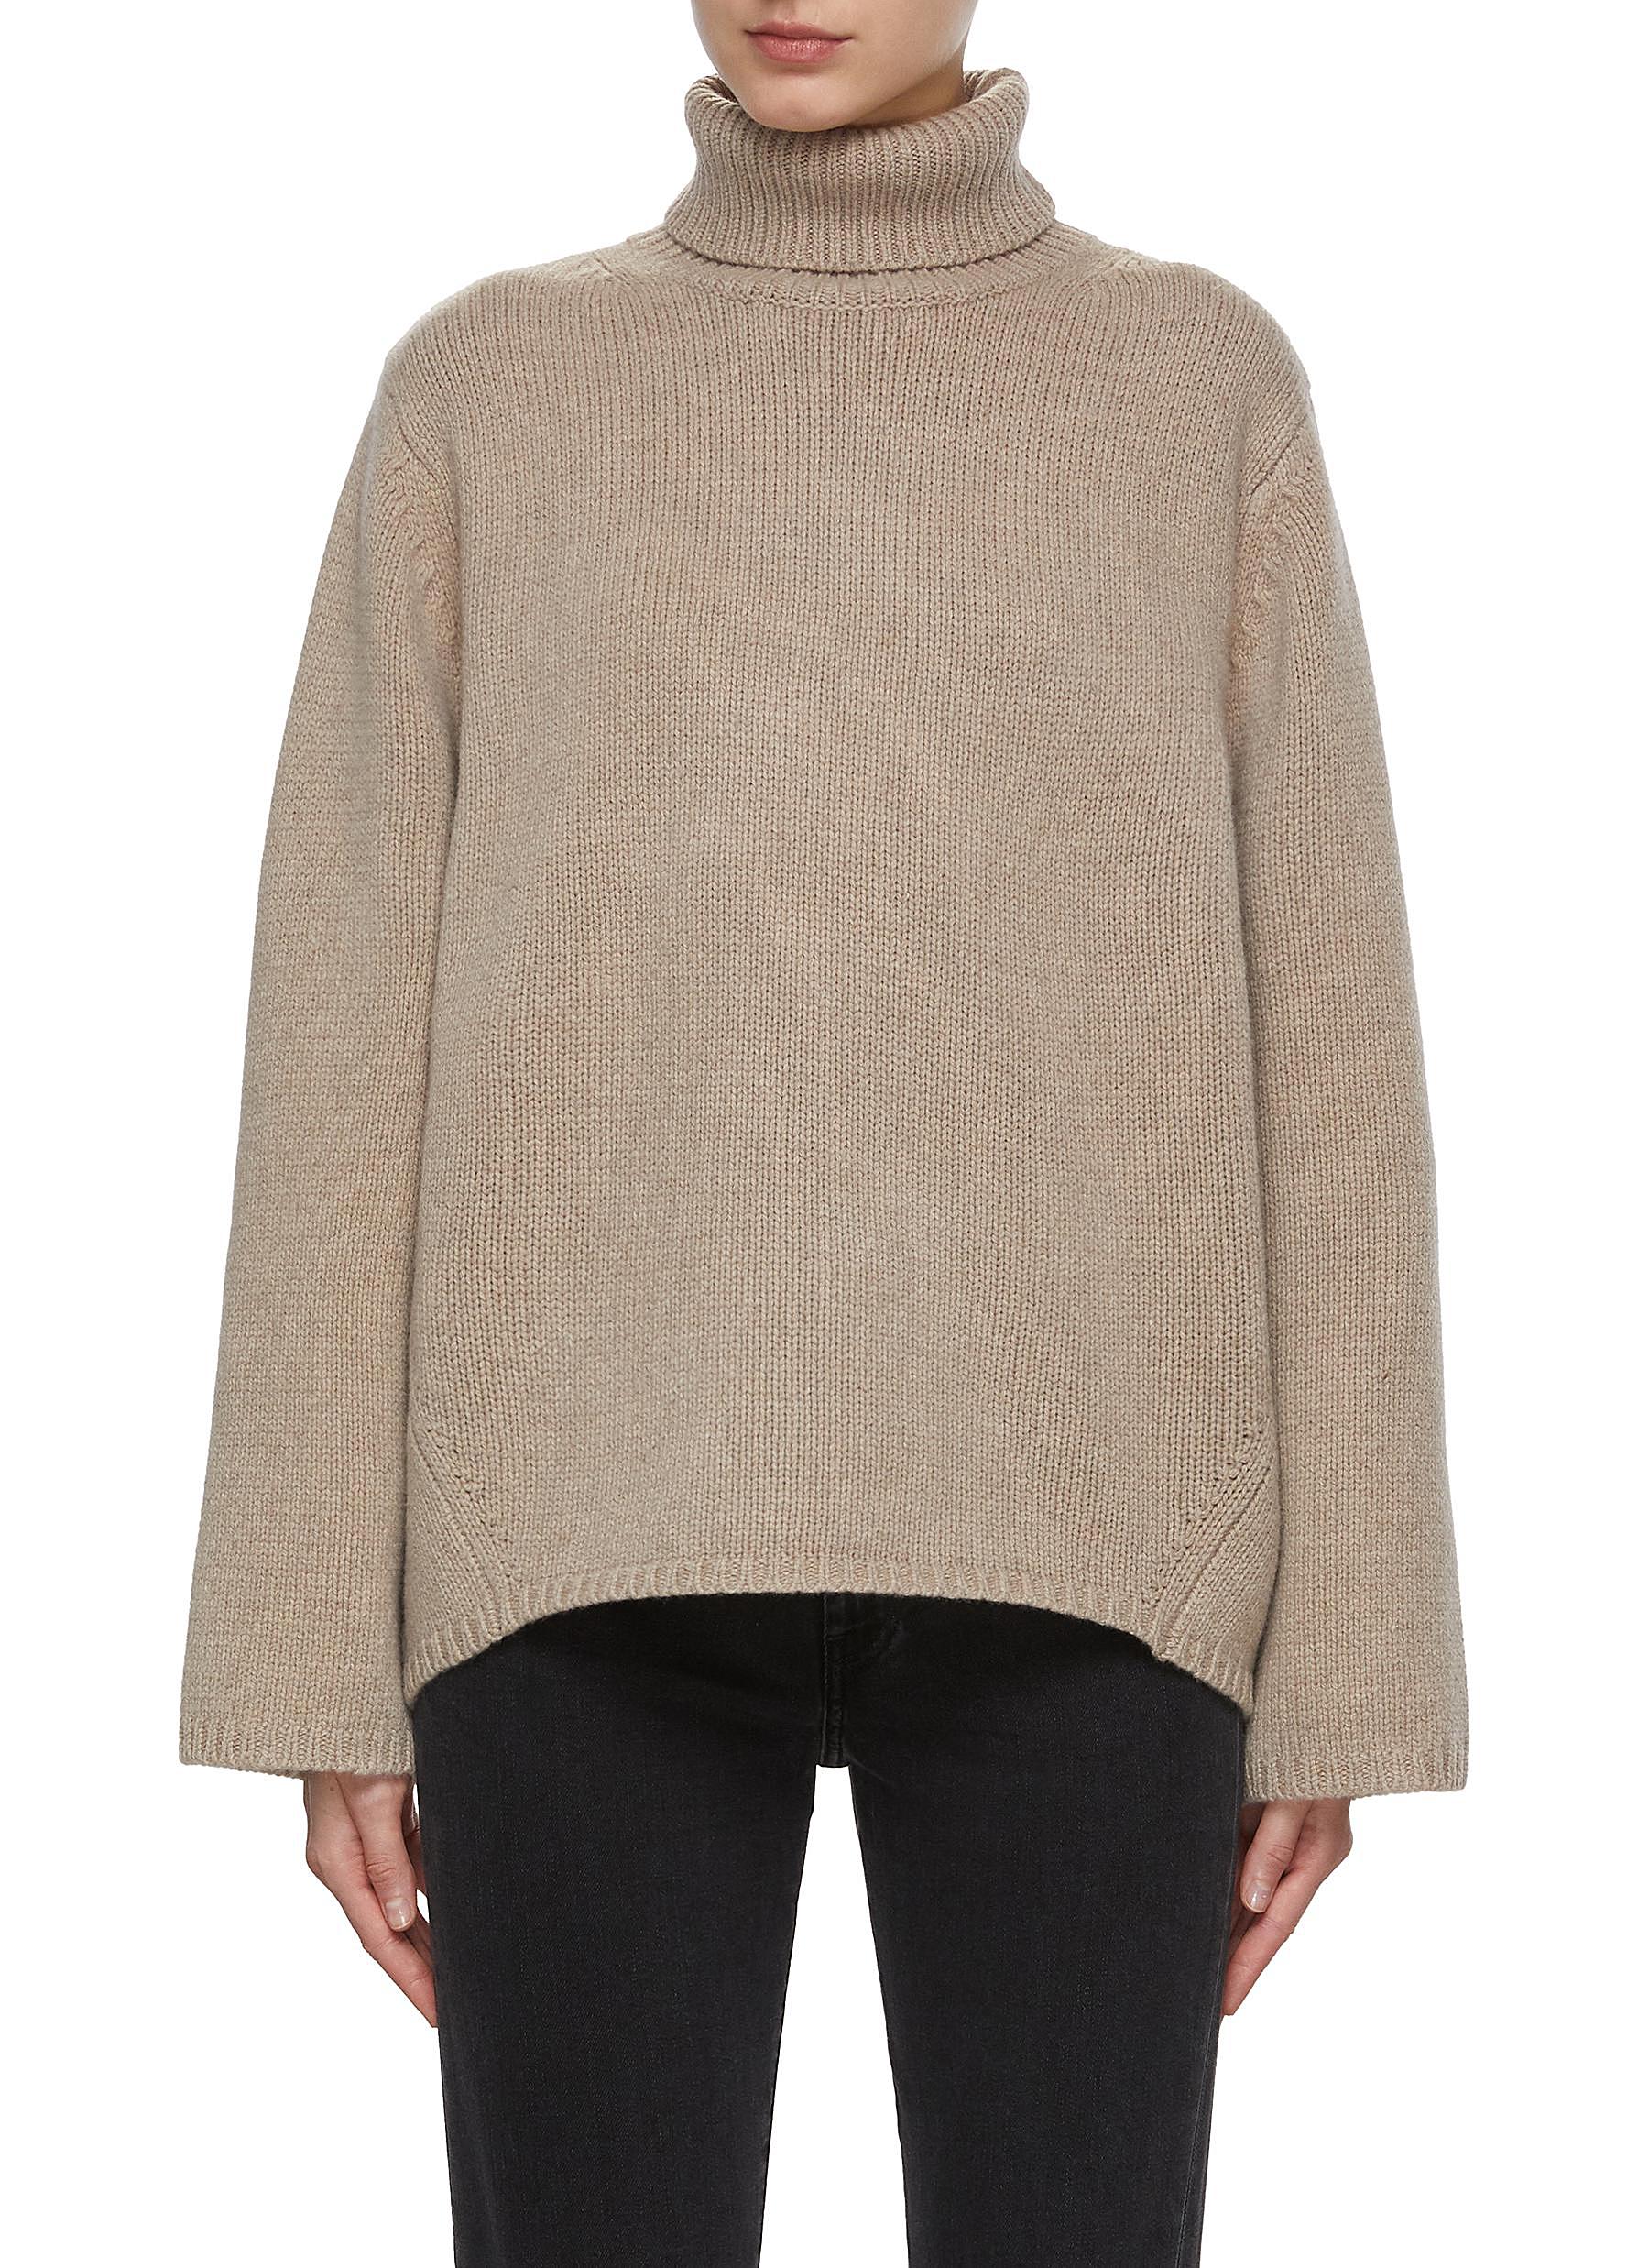 Wool Cashmere Blend Turtleneck Sweater